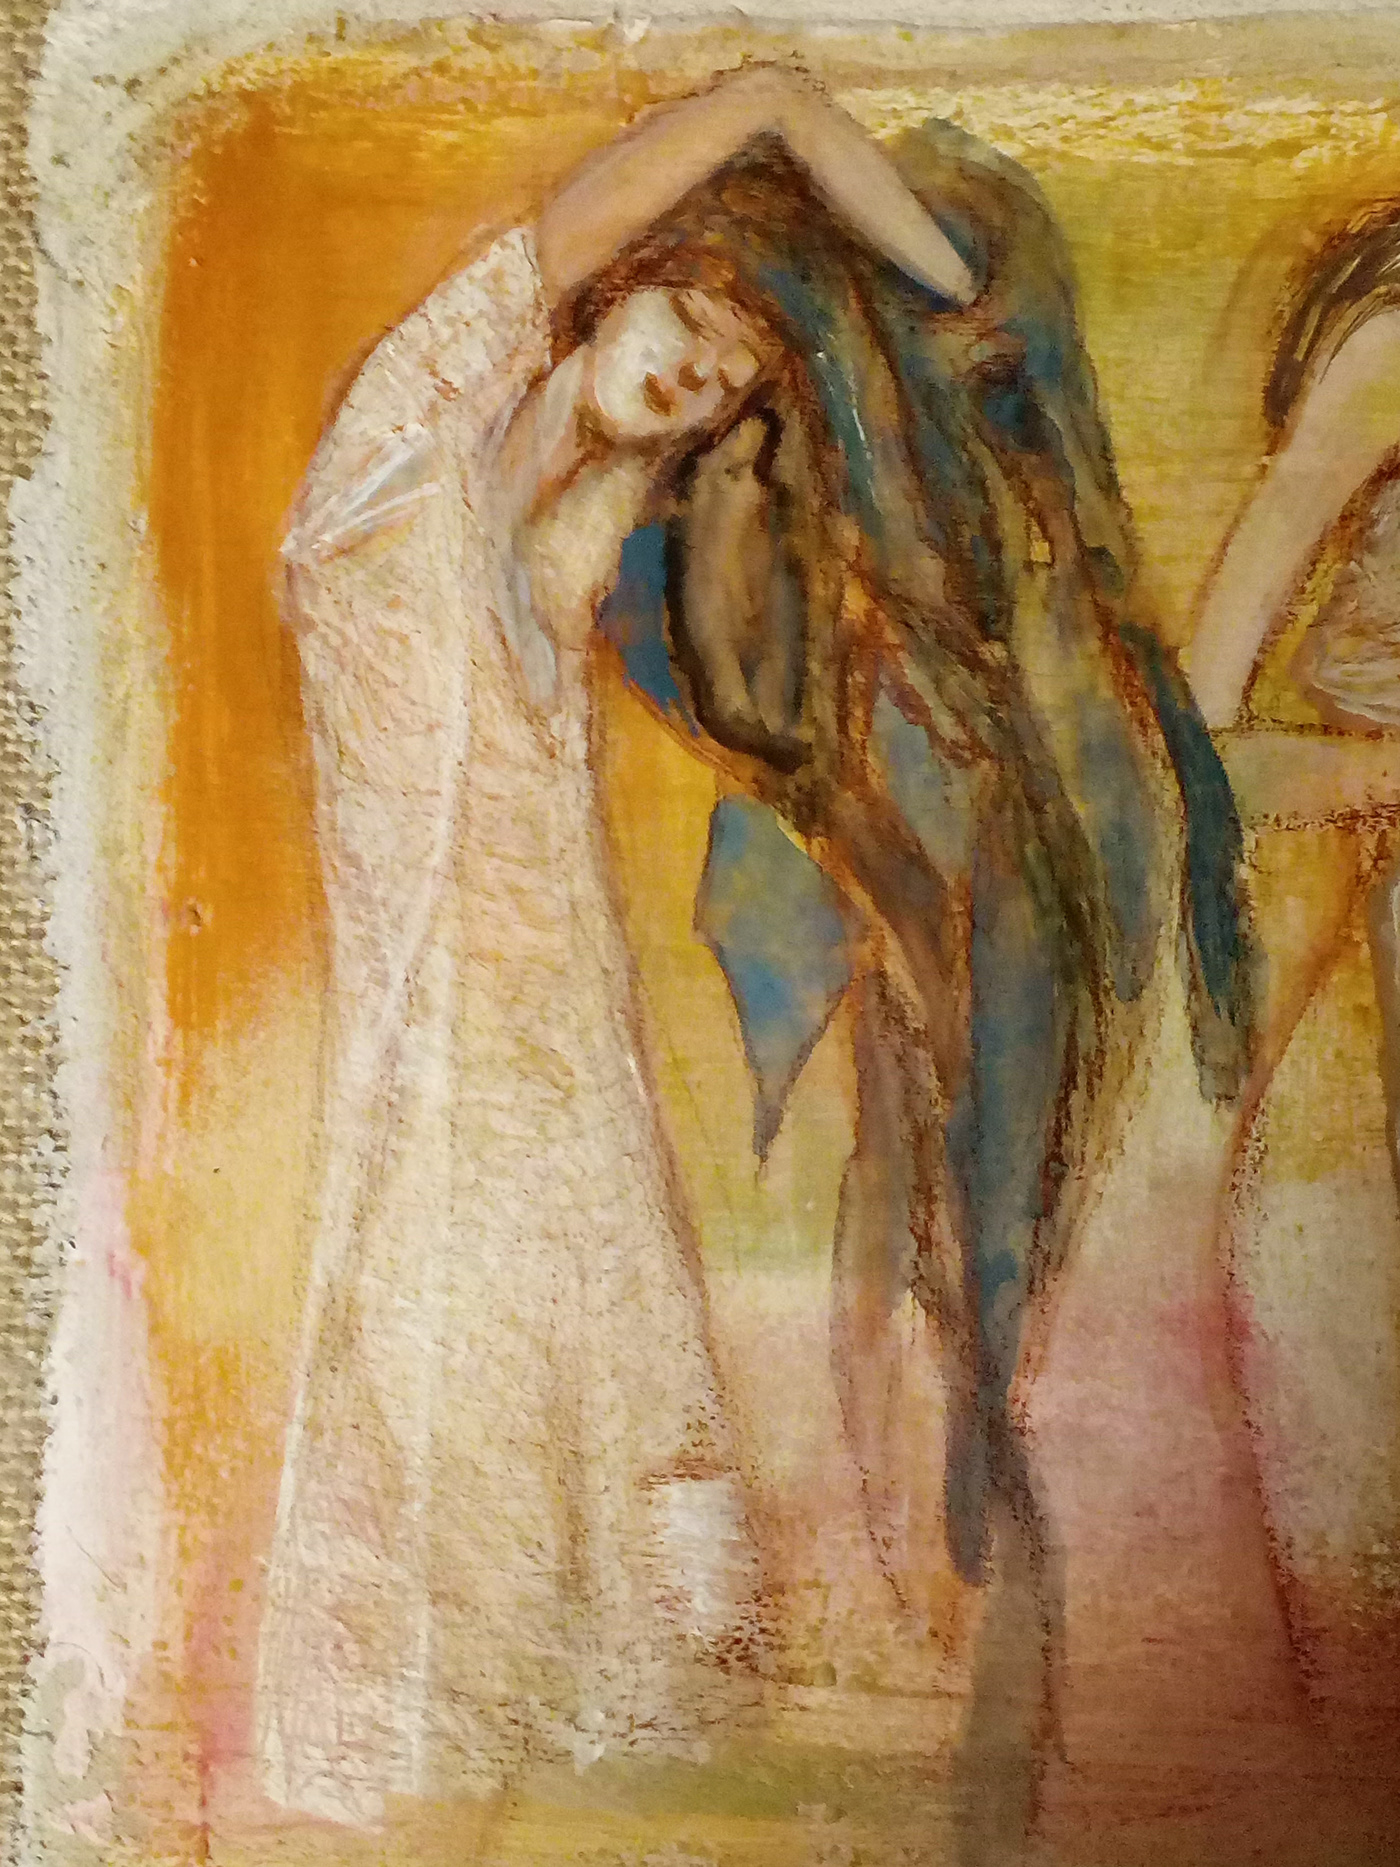 canvas art medioeval passion portrait Santa Chiara assisi saint clara Saint Francis soul inspire